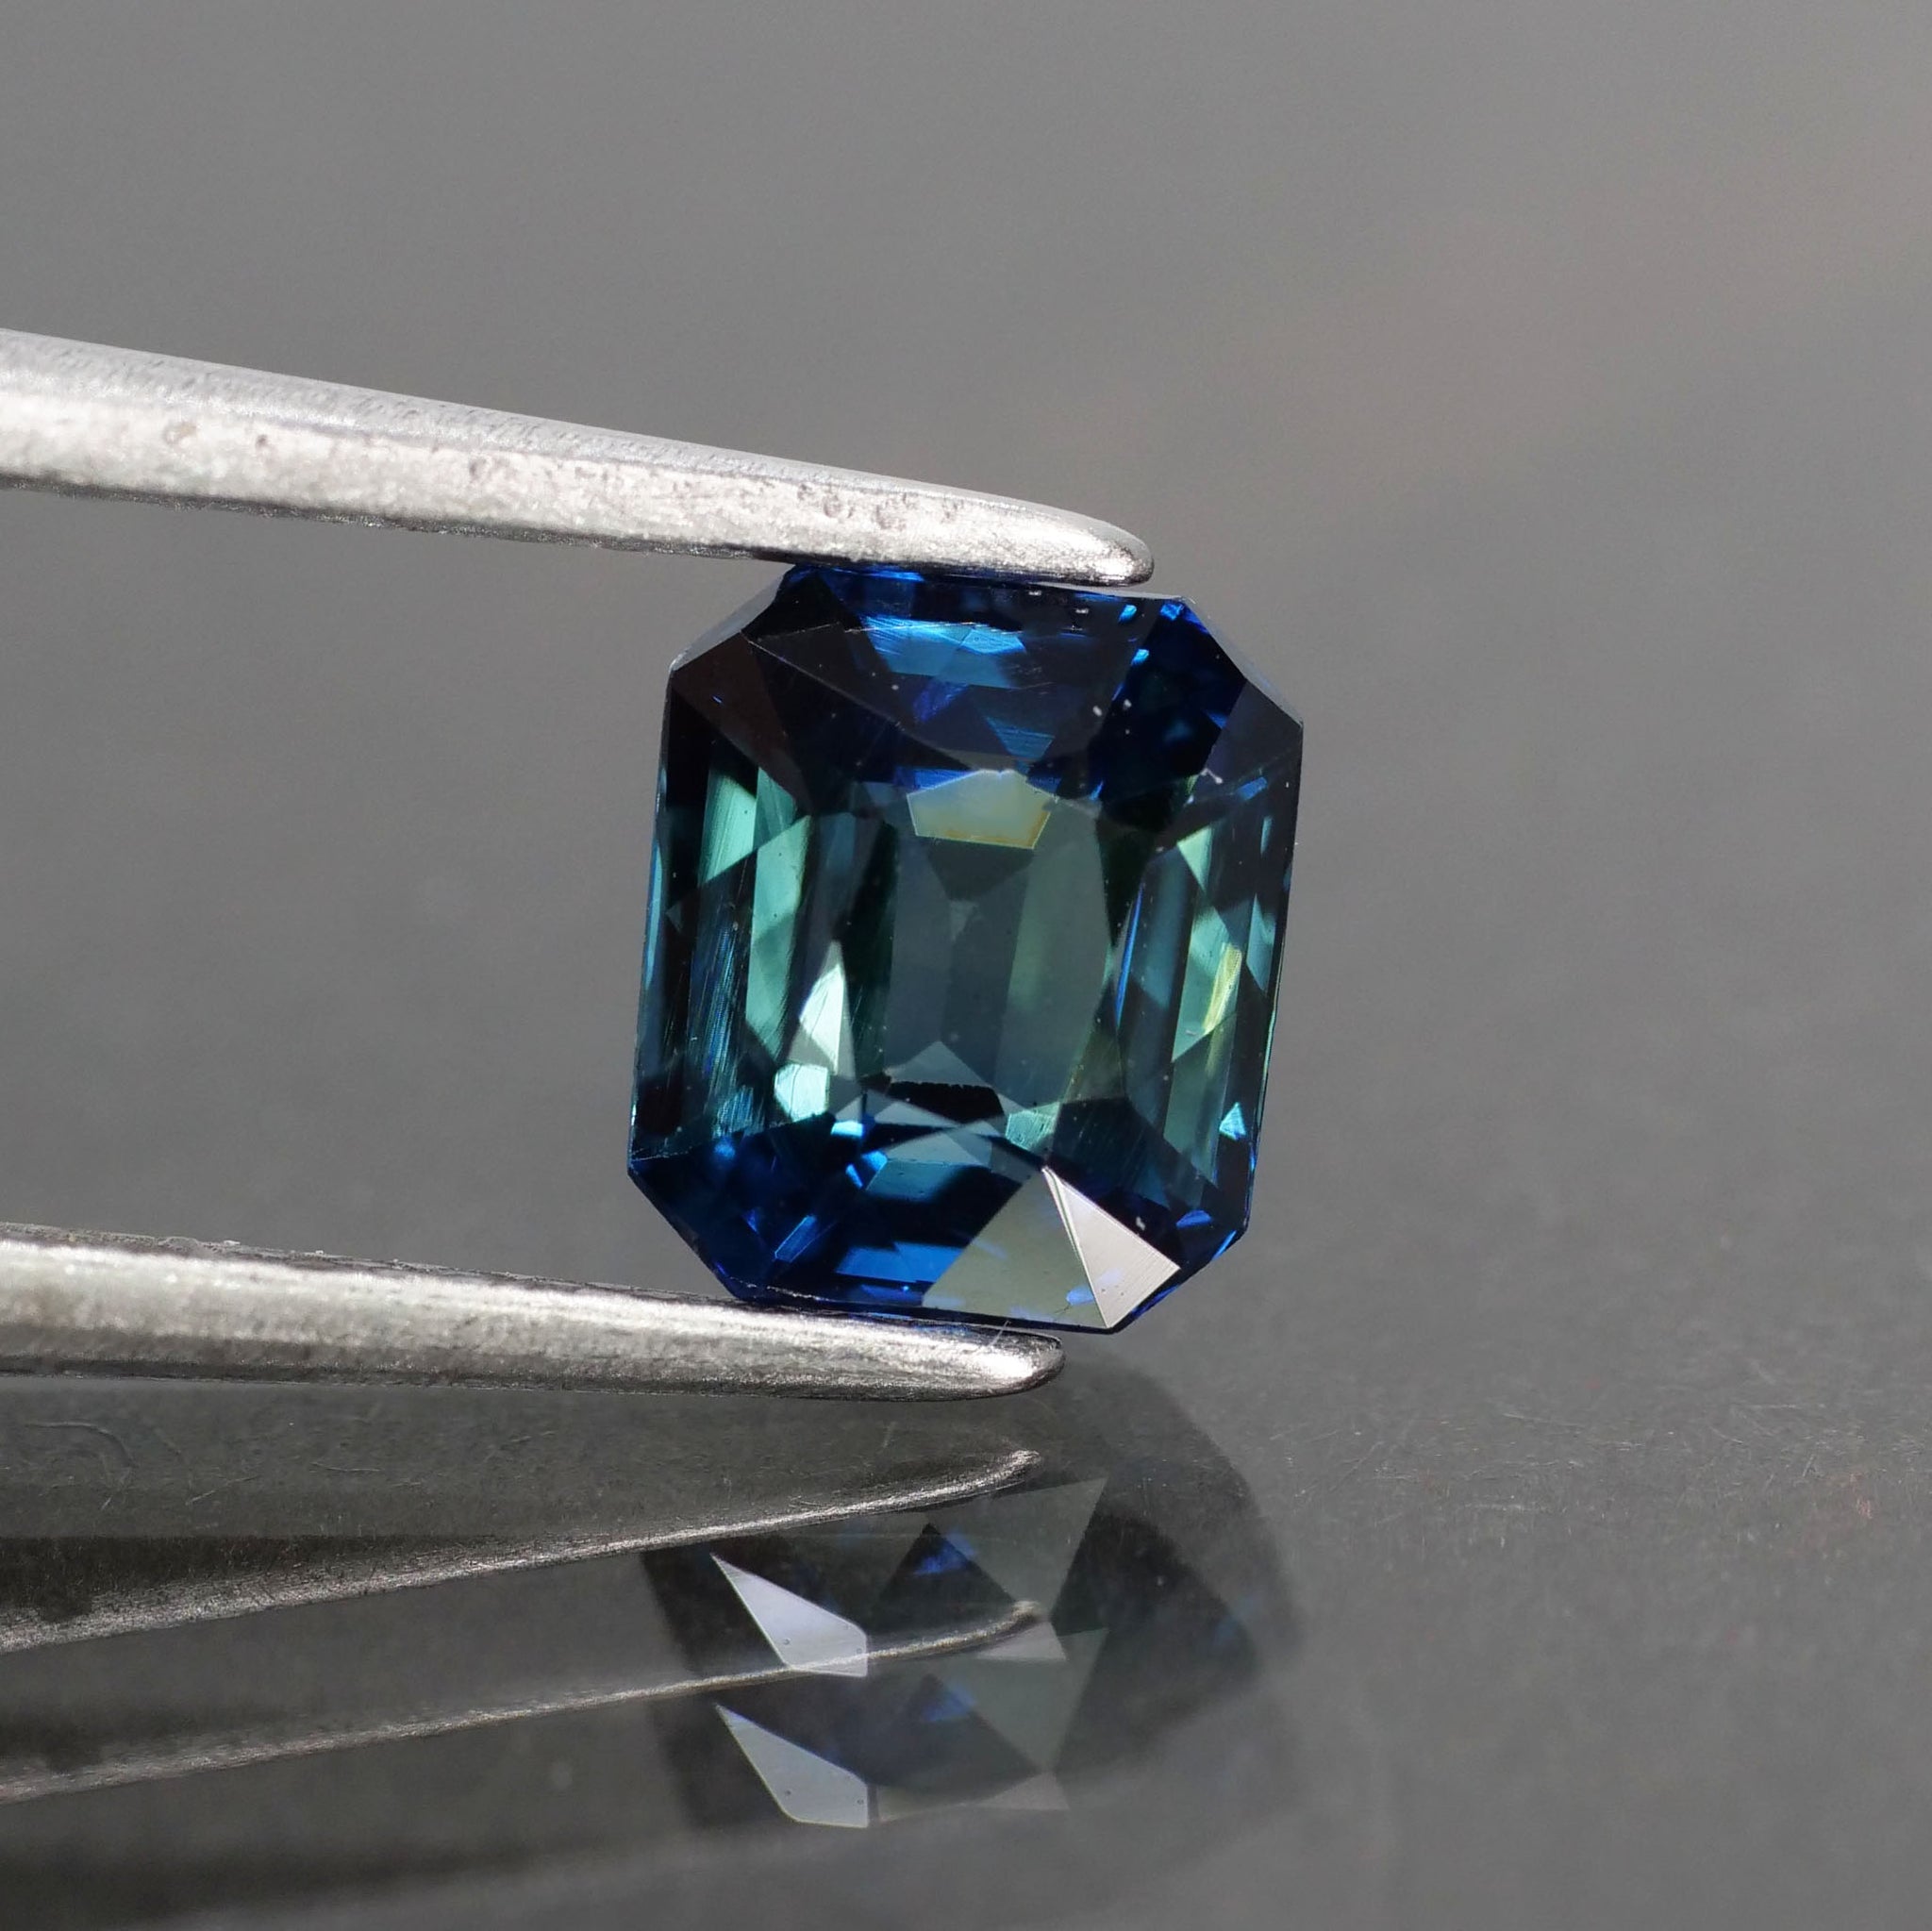 Sapphire teal blue, bluish green, bi-colour, emerald cut, VVS 6x5 mm 1 ct, Australia - Eden Garden Jewelry™